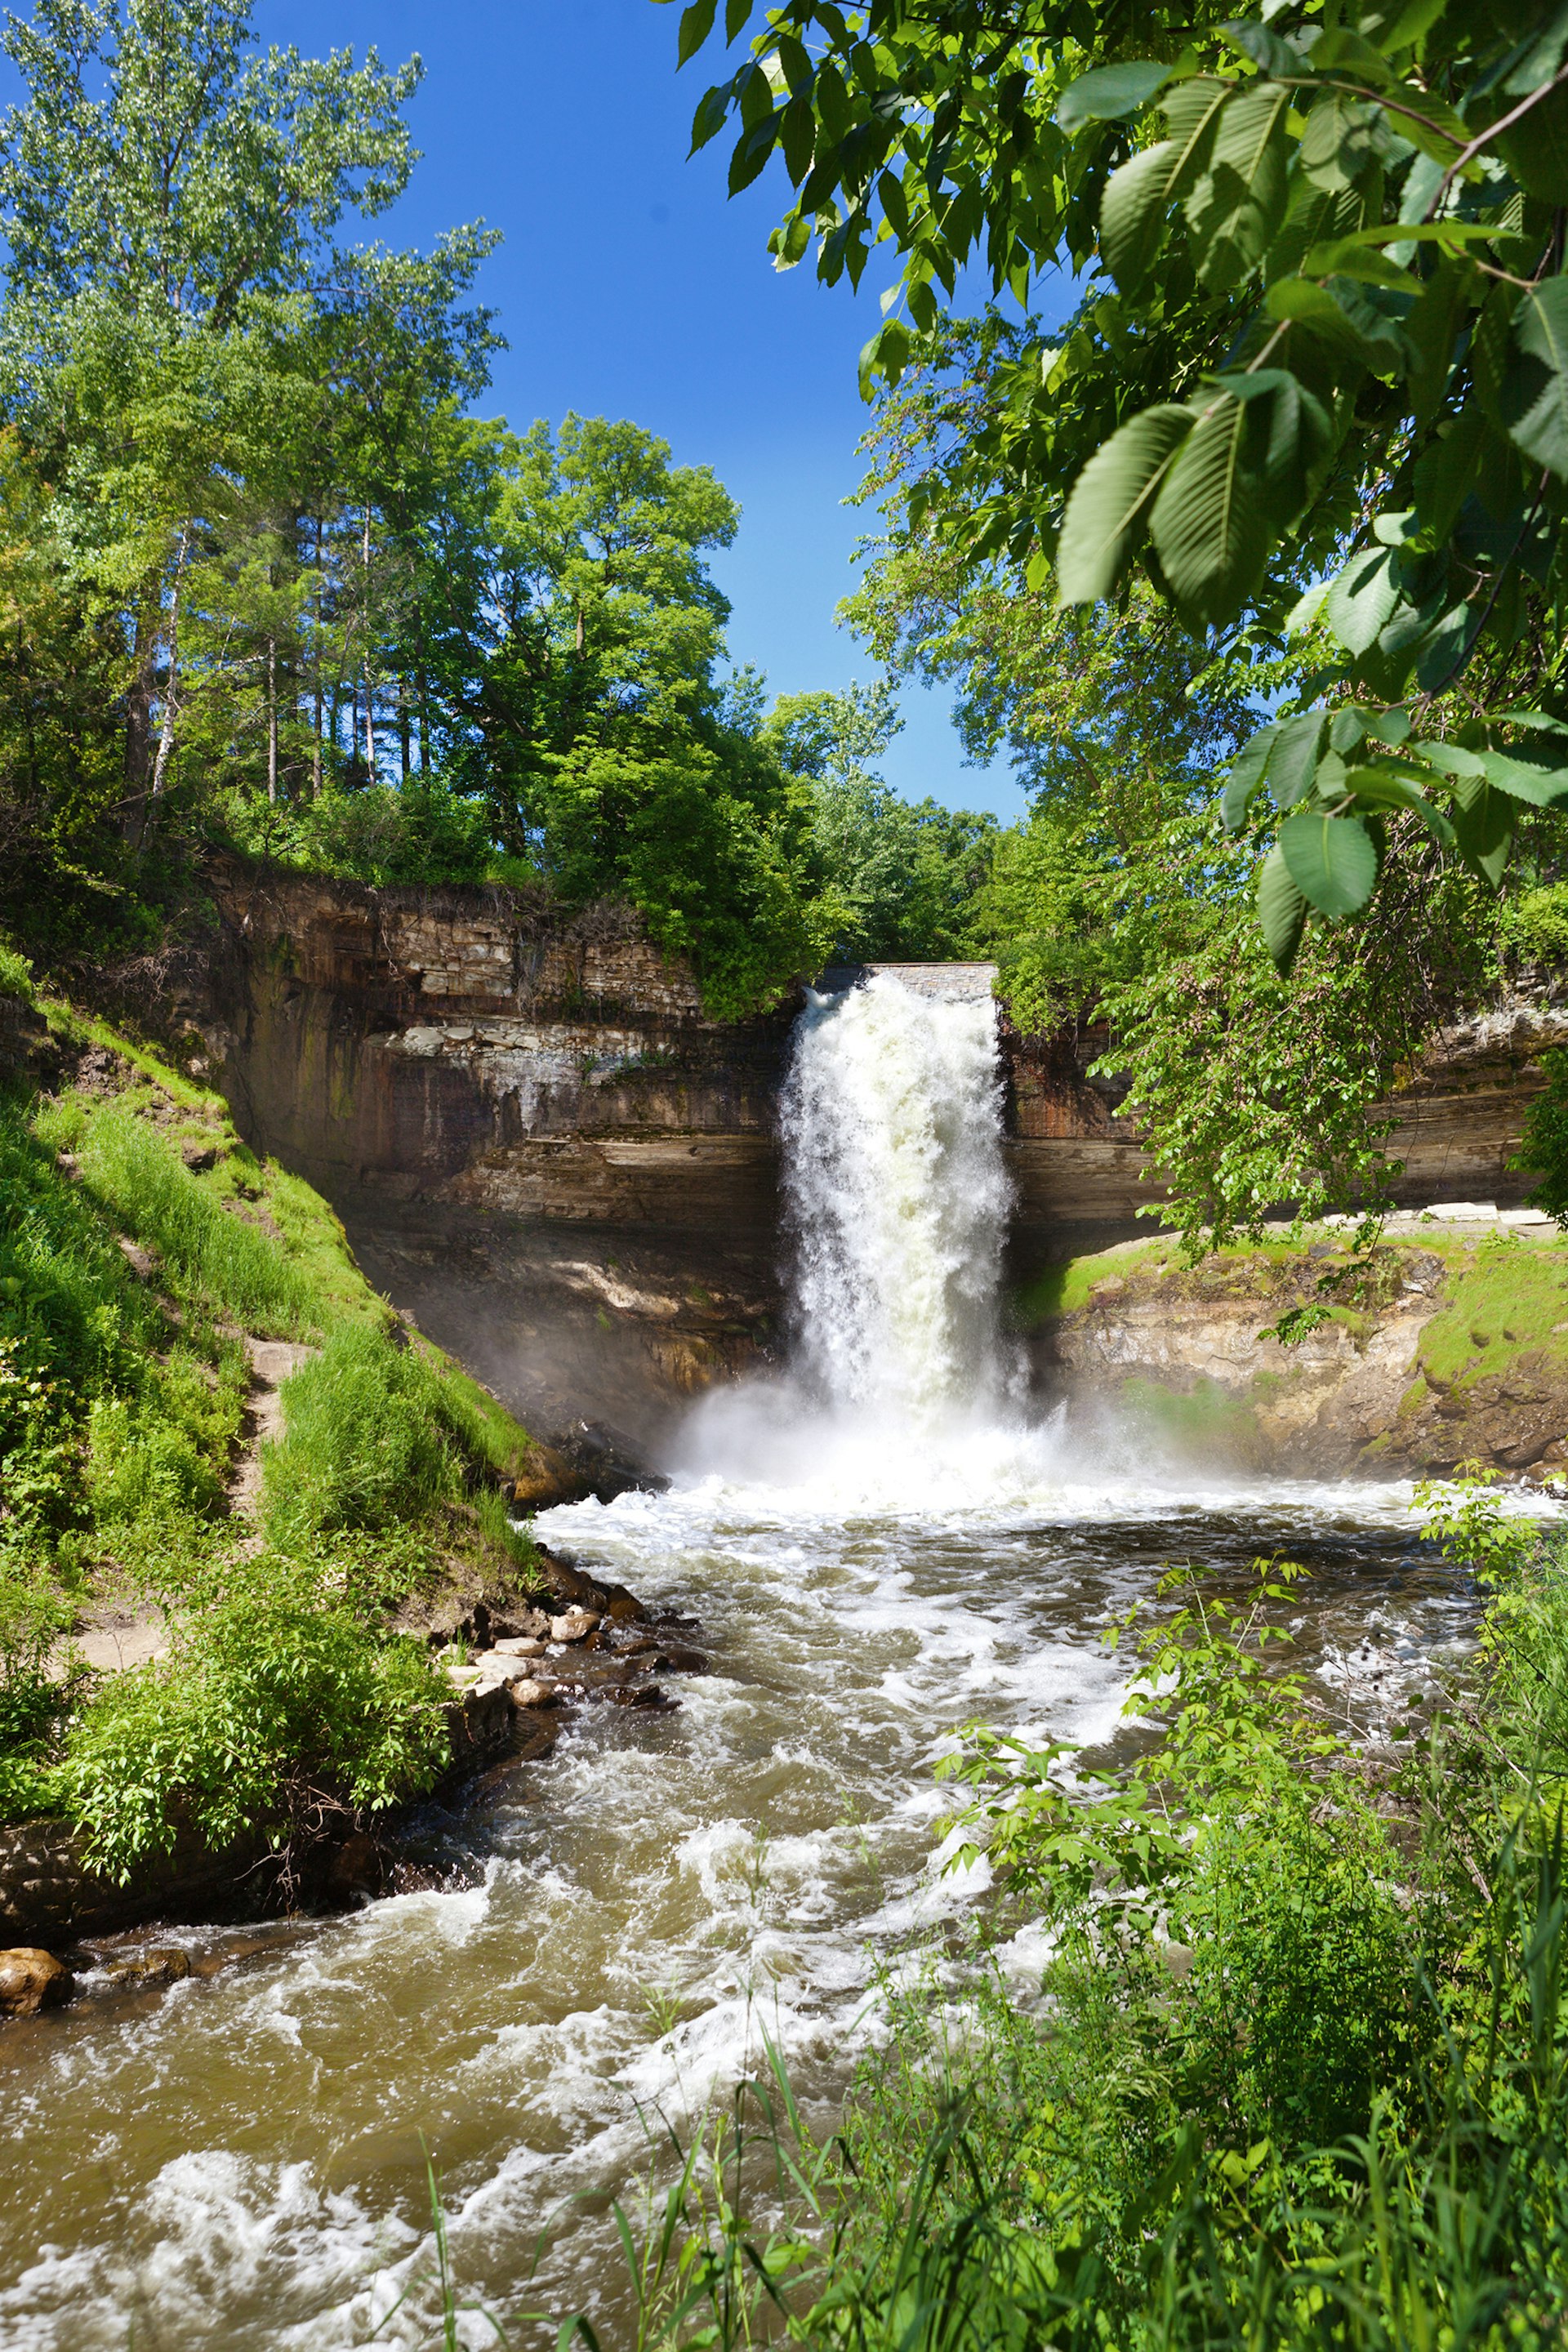 Minnehaha Falls of Minneapolis, Minnesota, USA. A popular tourist destination in the city of Minneapolis.